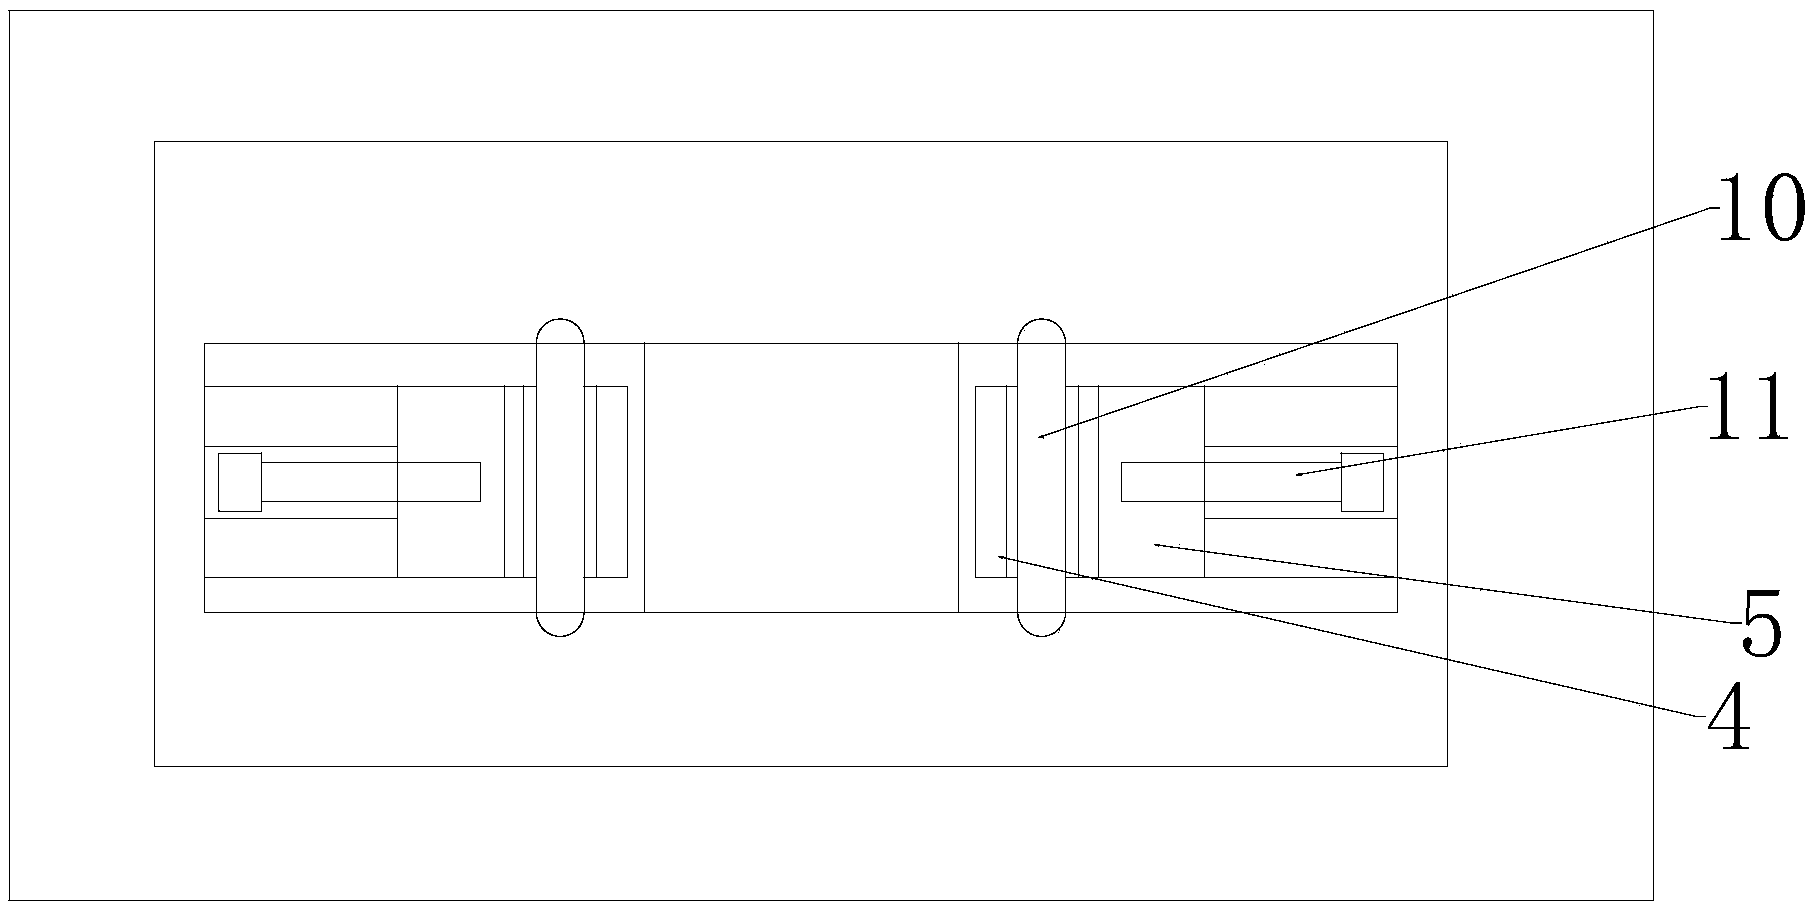 U-shaped bending die with shaping function